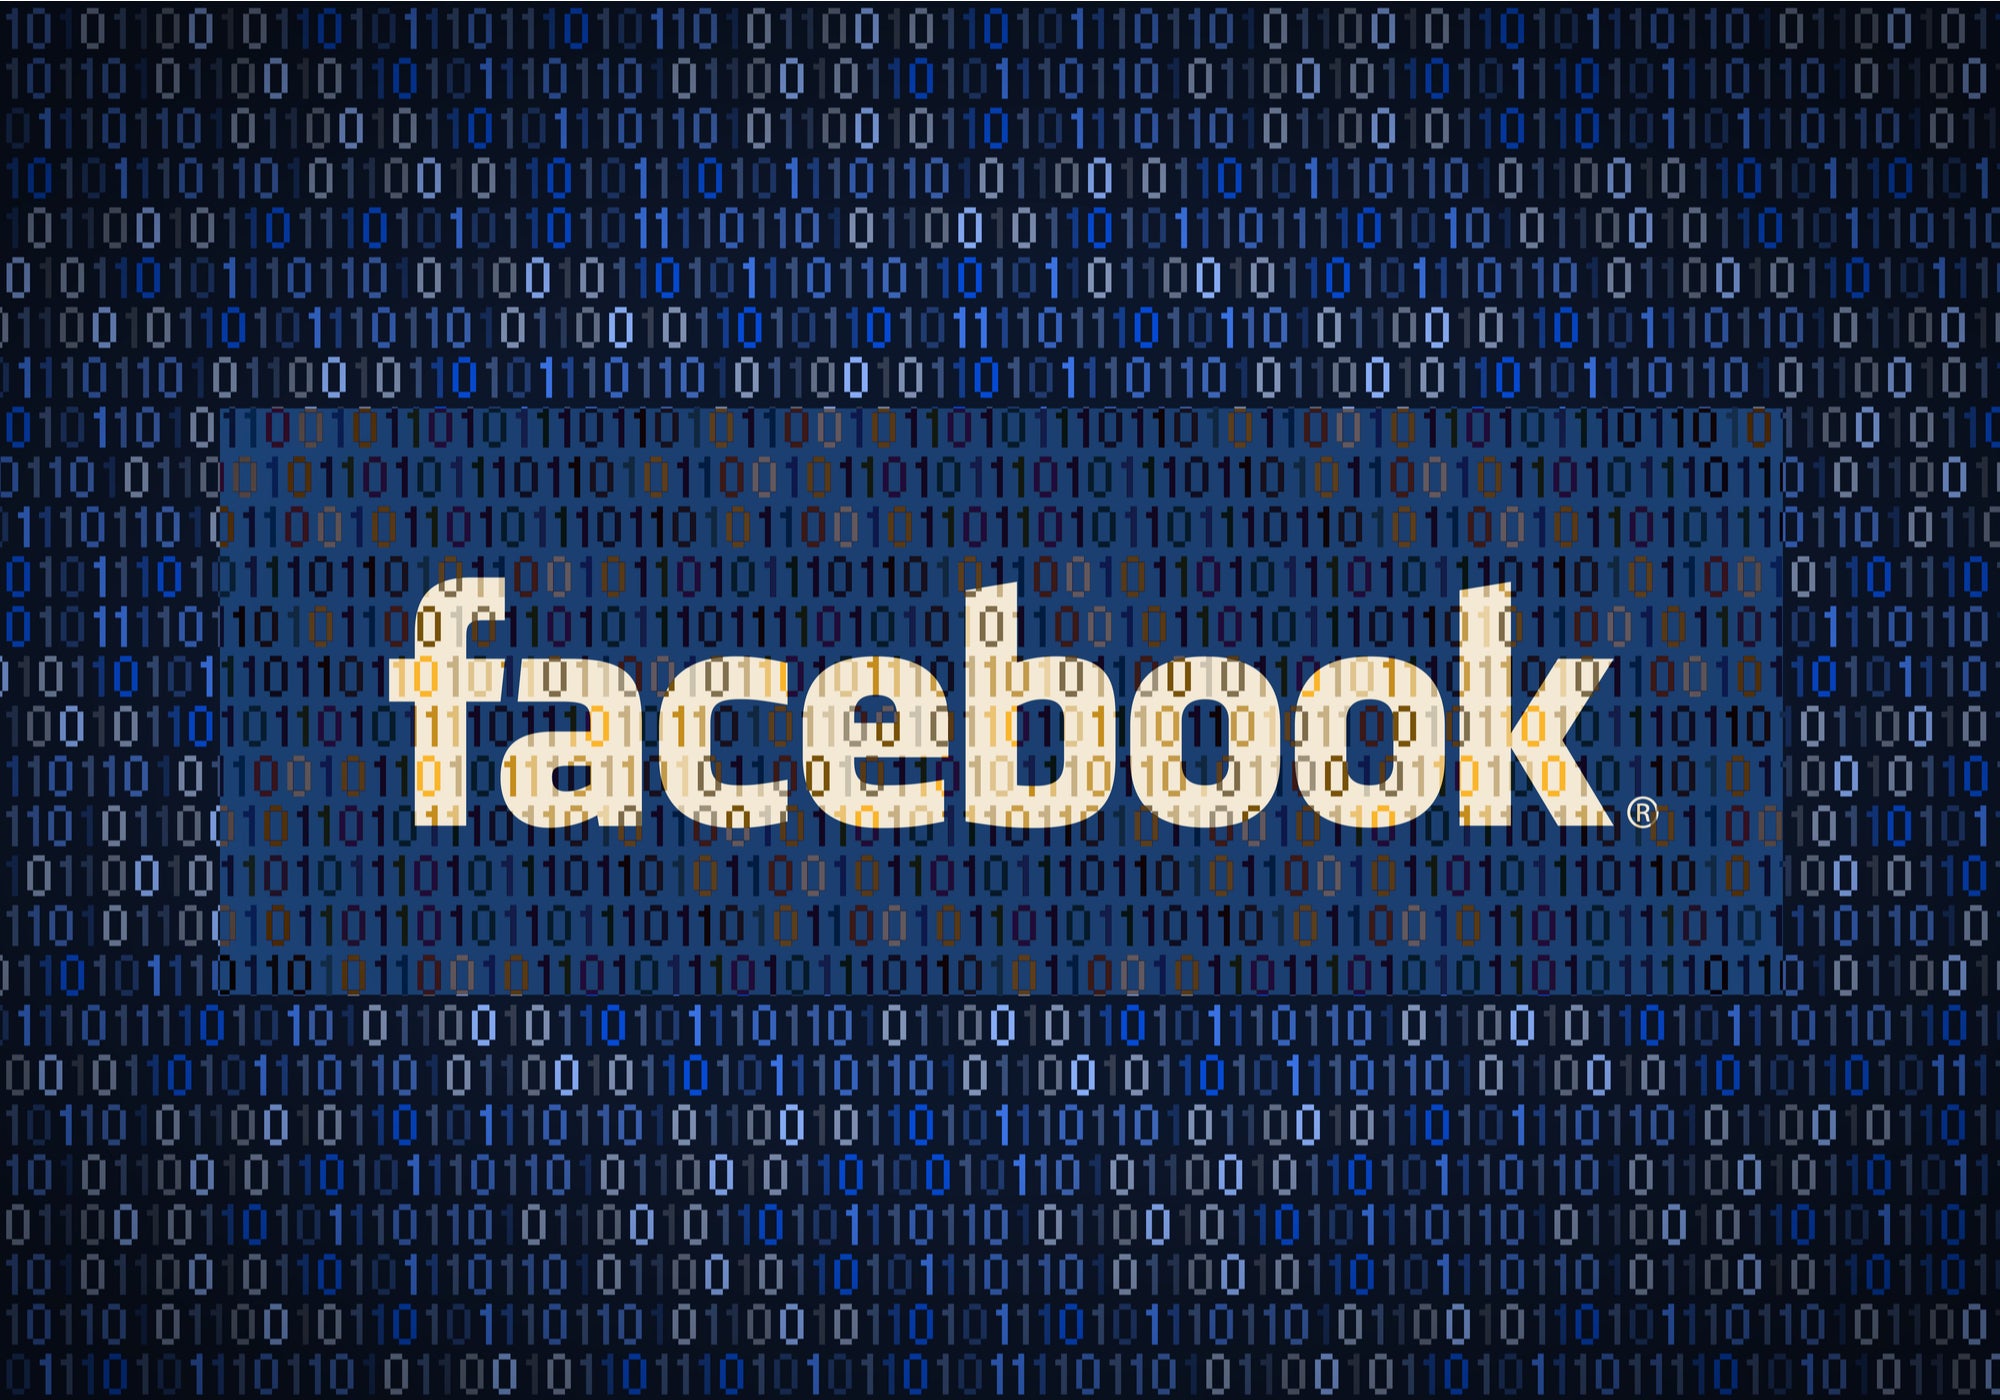 facebook encryption plans